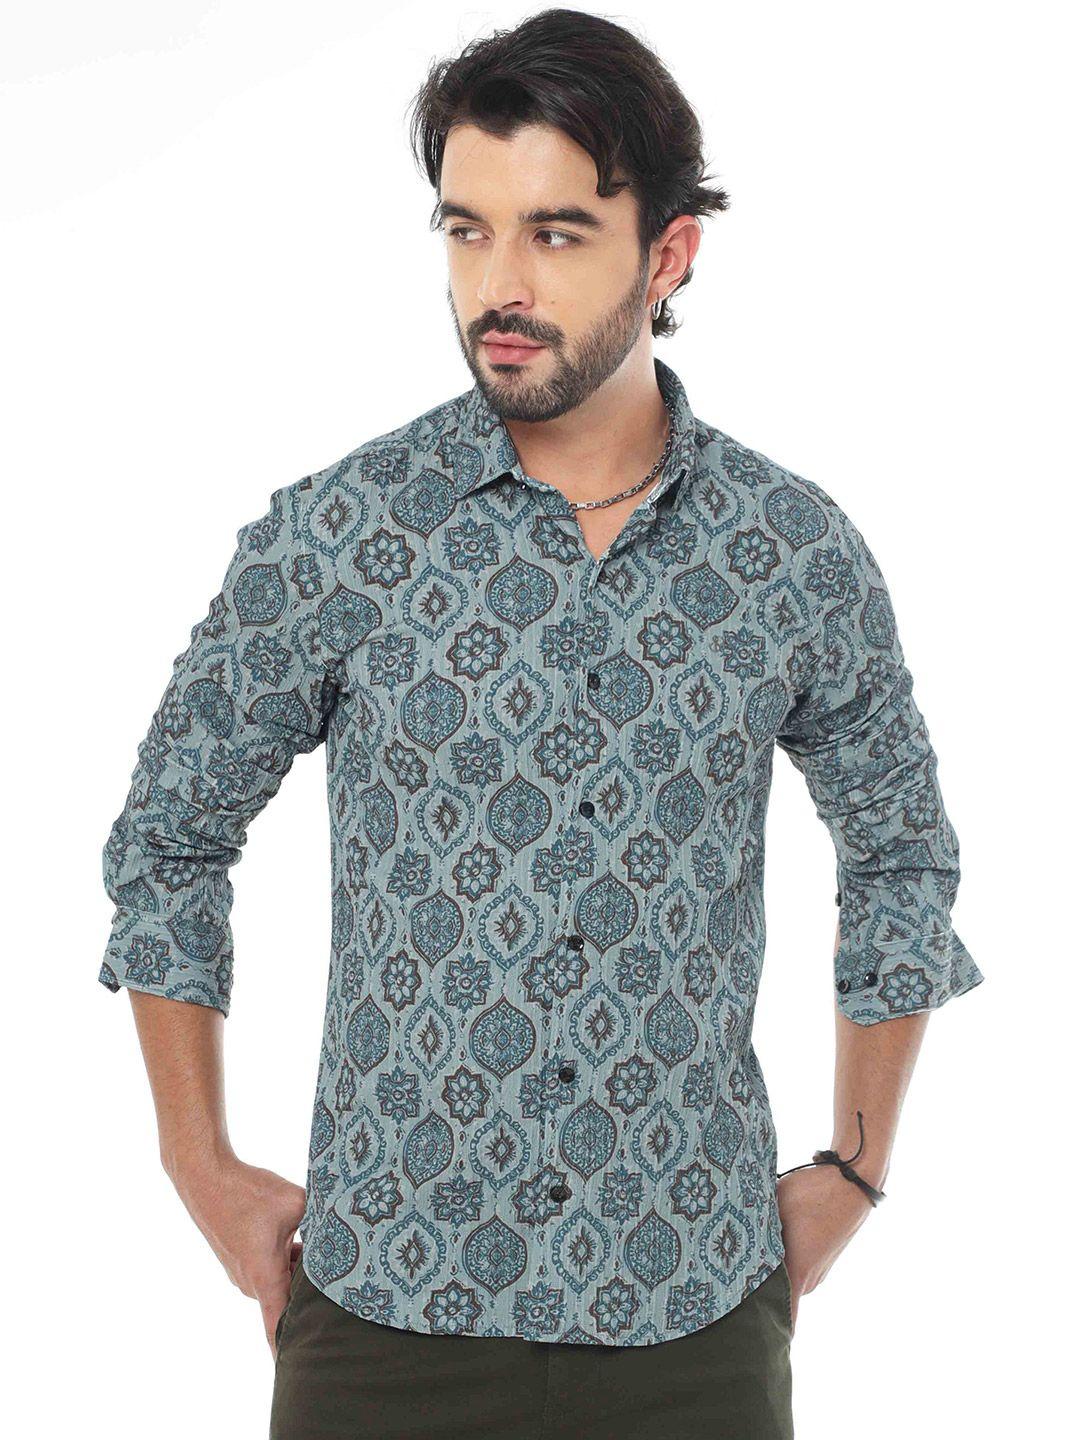 soratia ethnic motifs printed spread collar ultra soft cotton casual shirt